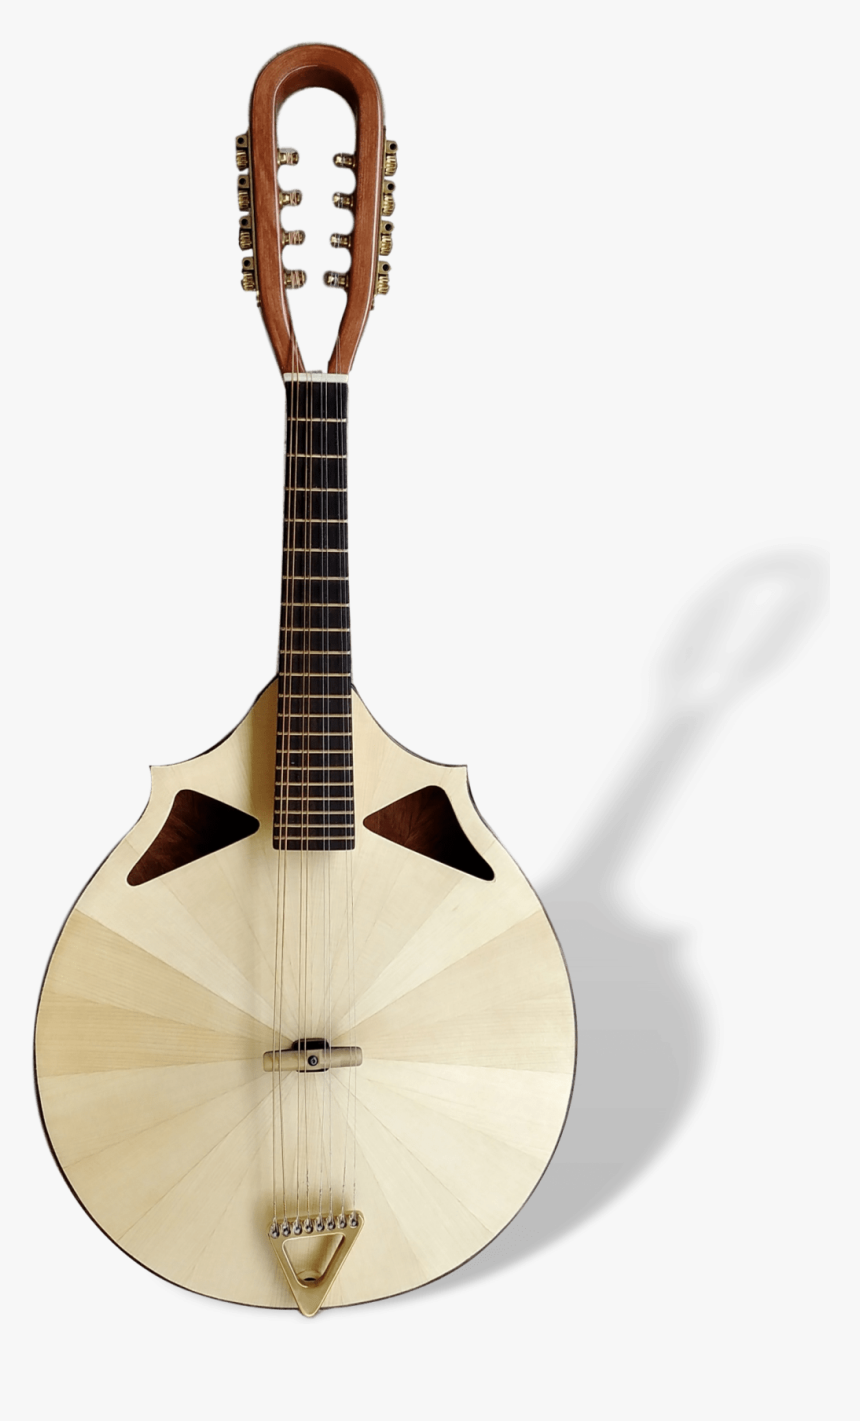 Richard Morgan Mandolin Rm-m3 Front - Traditional Japanese Musical Instruments, HD Png Download, Free Download